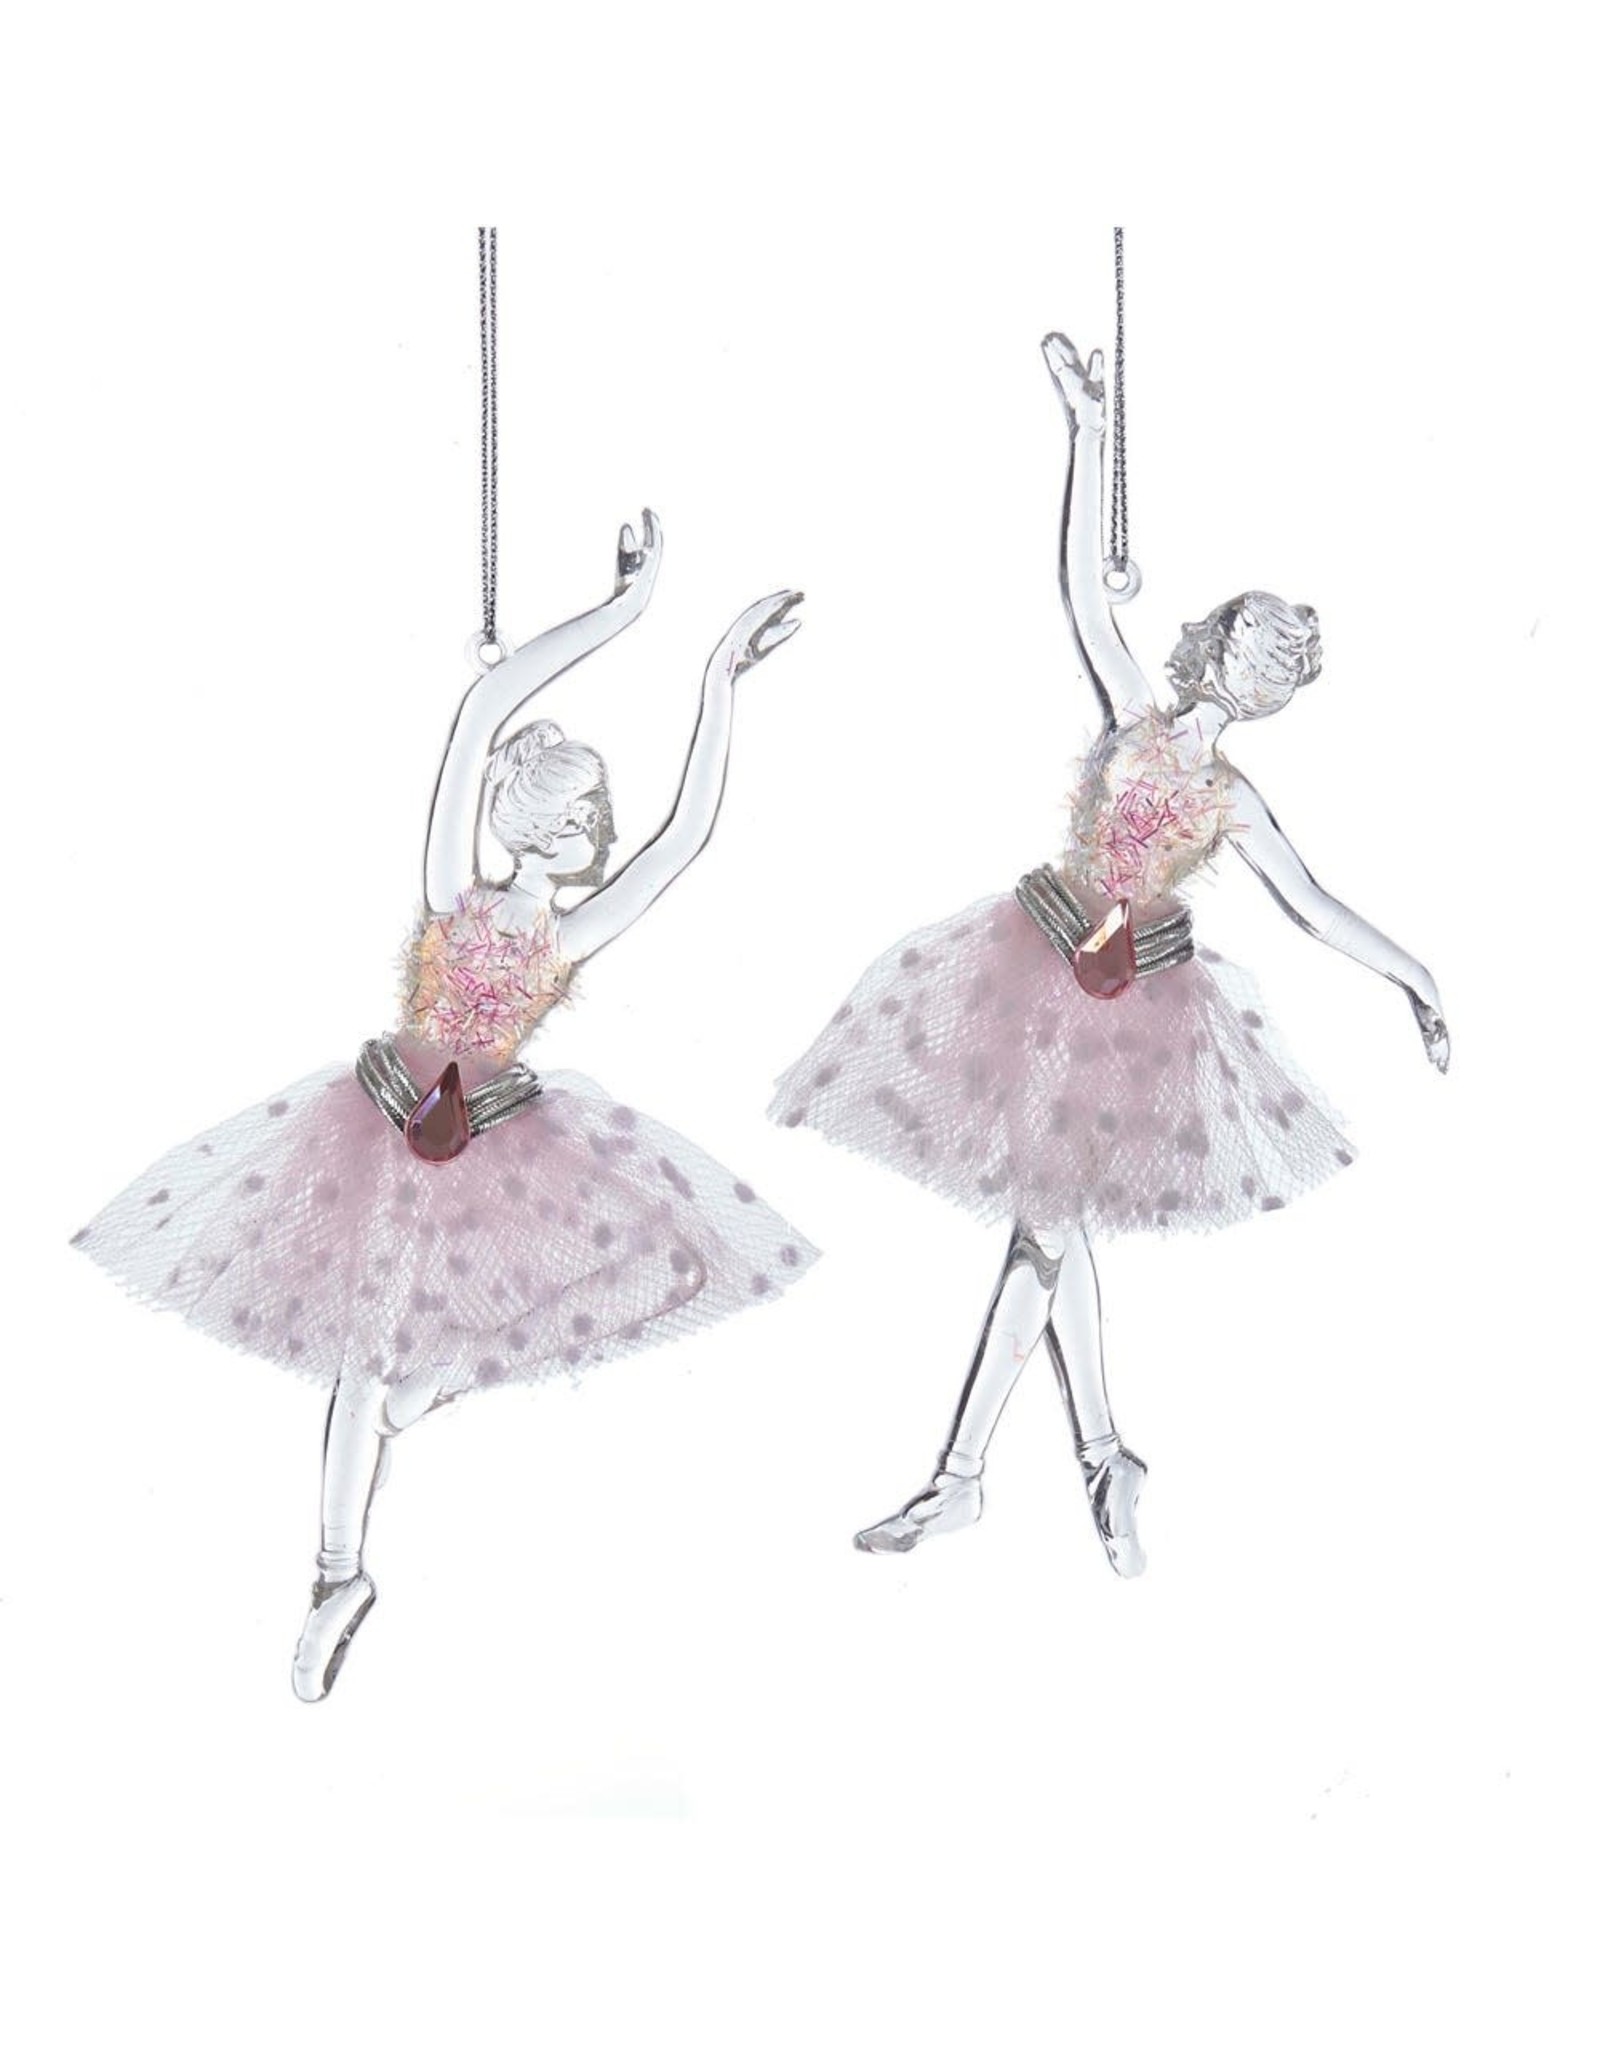 Kurt Adler Clear Acrylic Ballerina Pink Tutu Ballet Ornaments 2pc Set